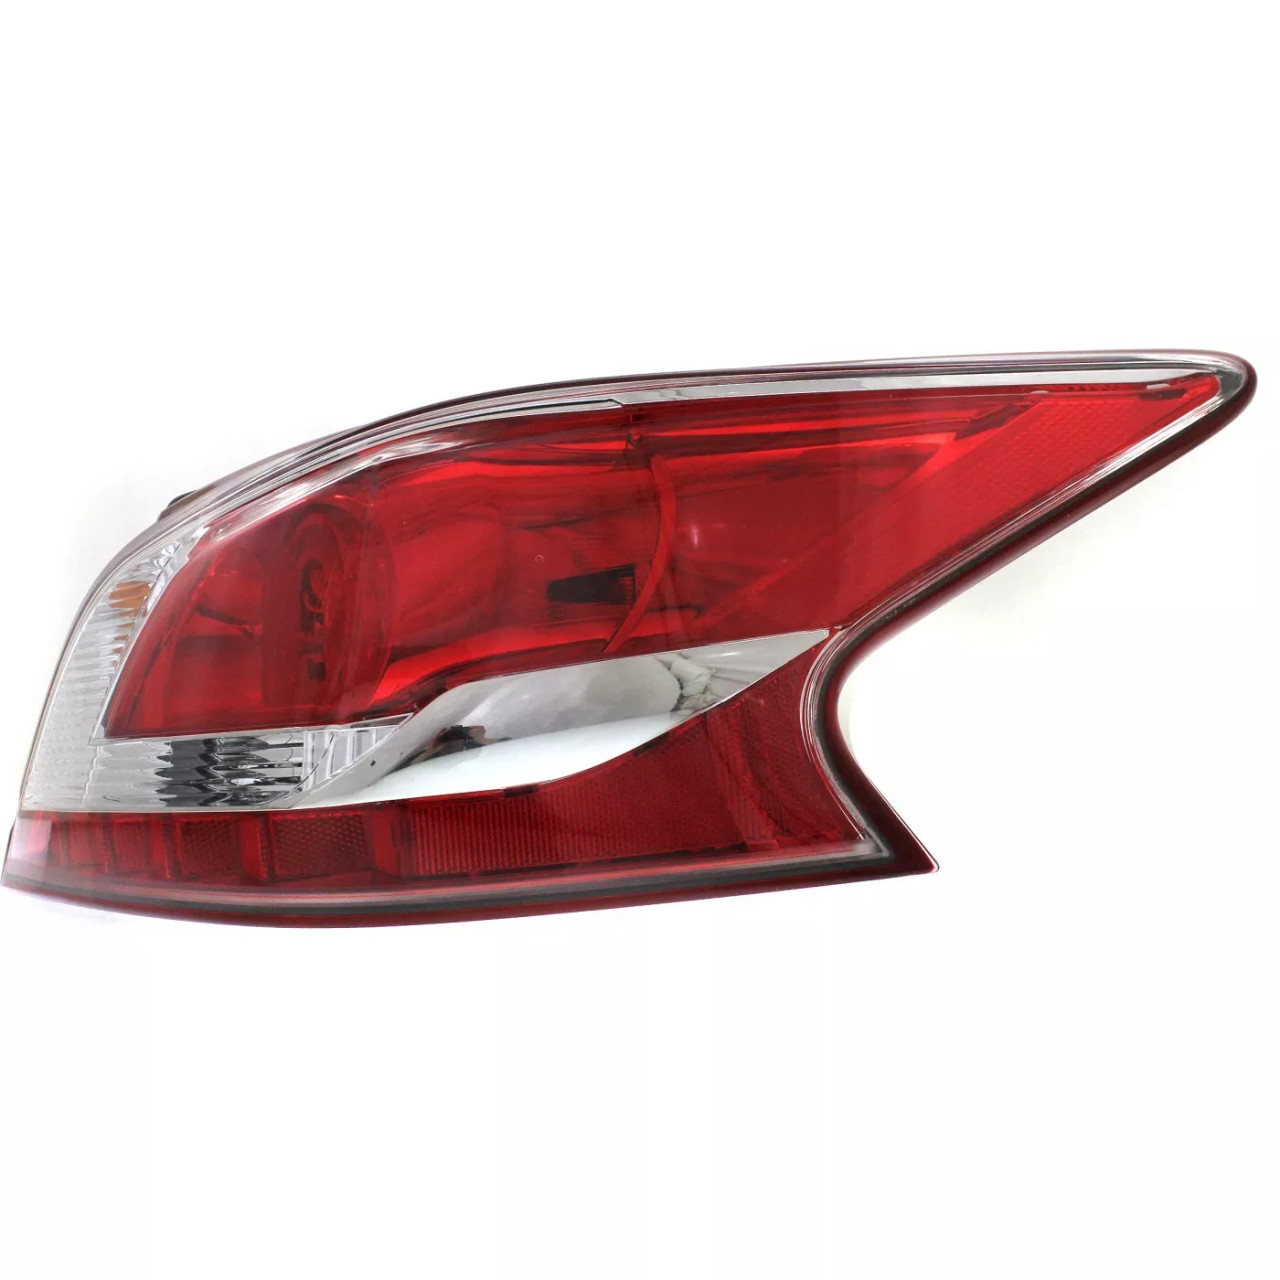 LED Tail Light Set For 2013 Nissan Altima Sedan Clear Lens w/ Bulbs 2Pcs CAPA